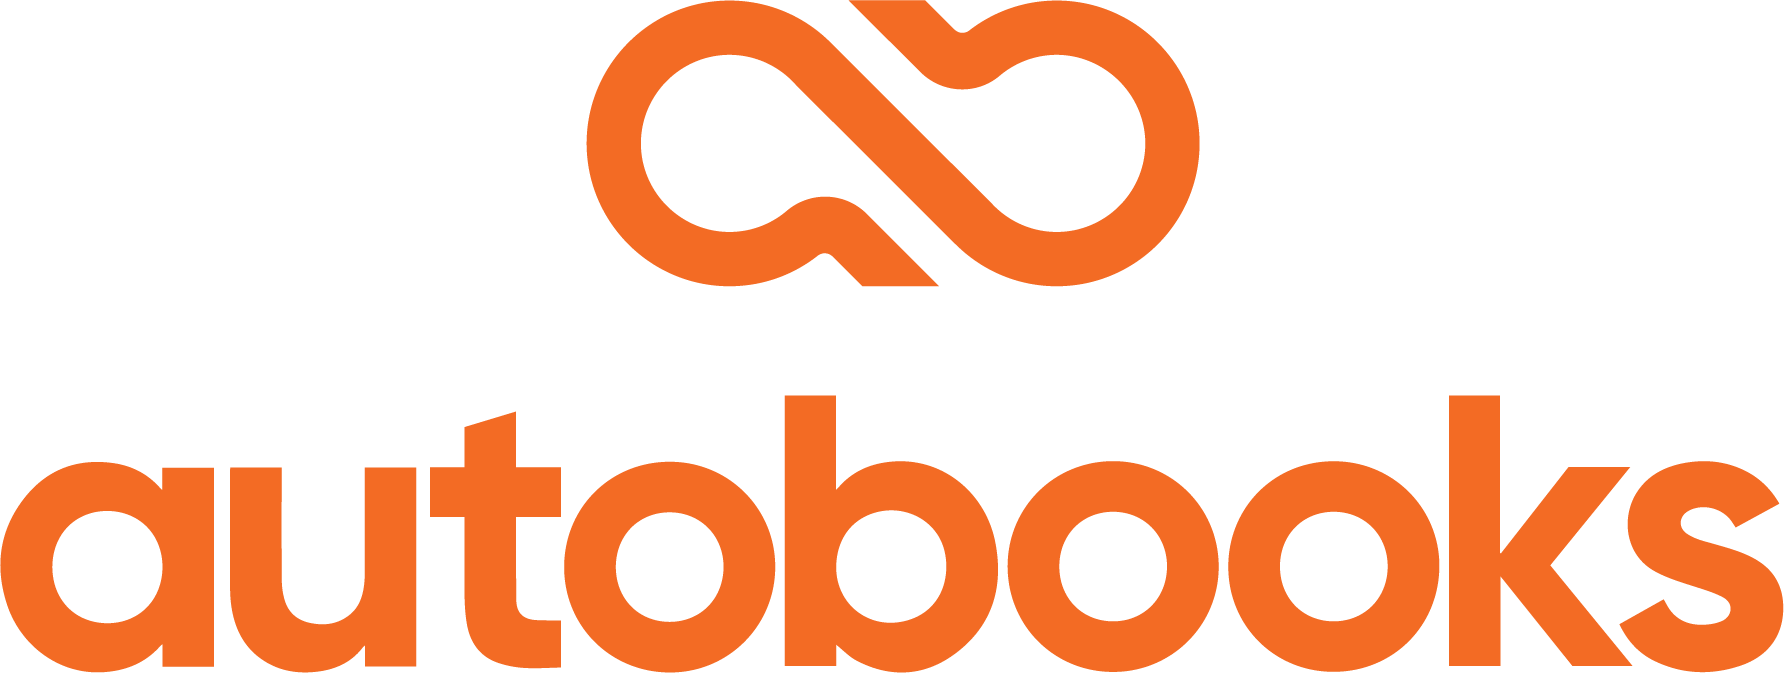 Autobooks Logo